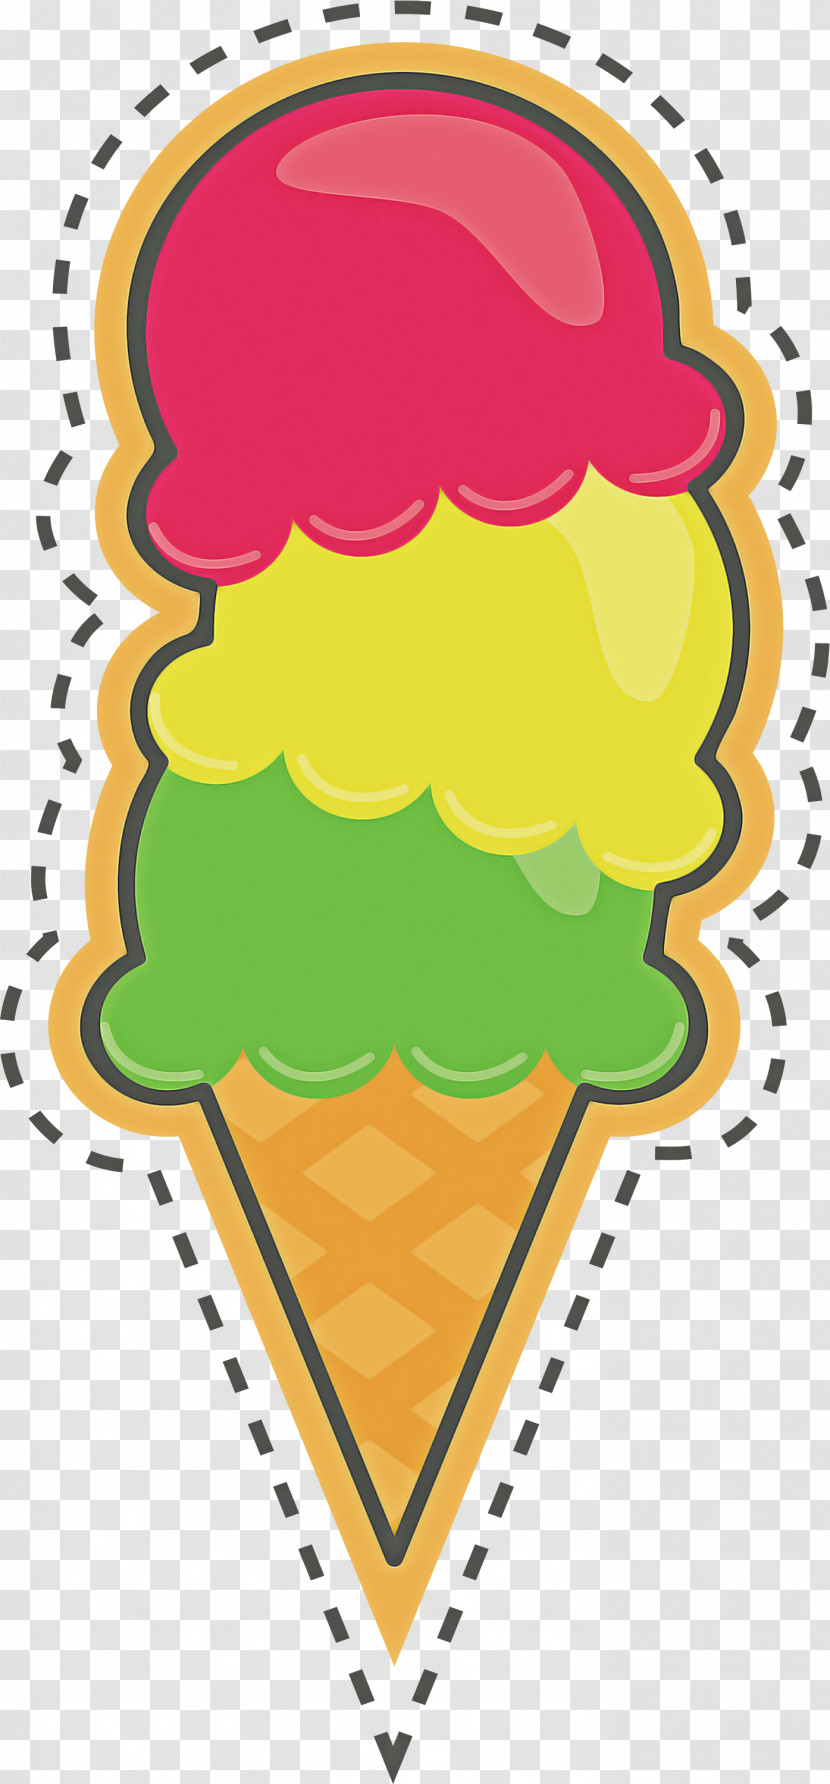 Ice Cream Cone Yellow Frozen Dessert Transparent PNG